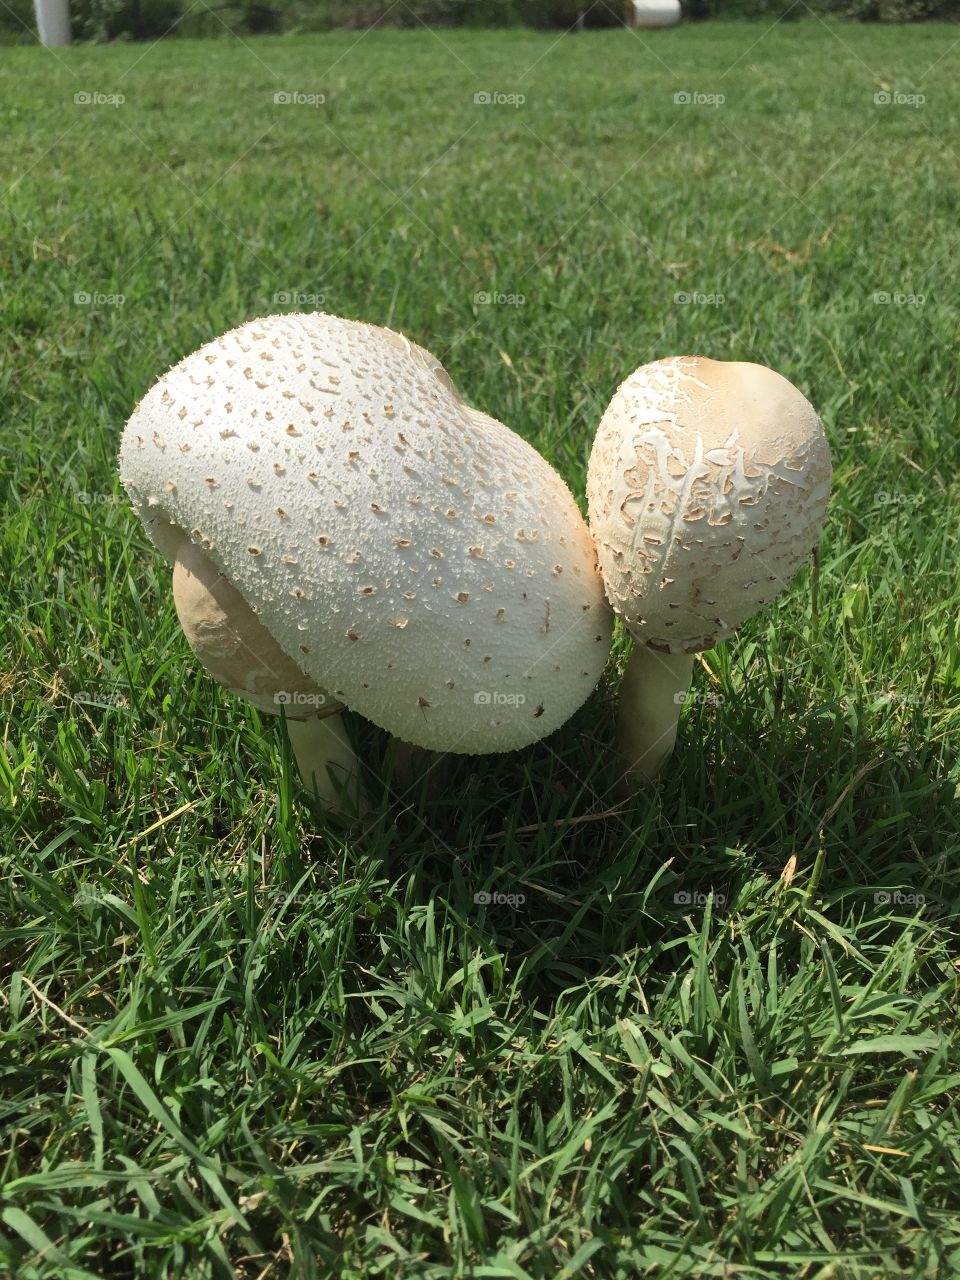 Mushrooms back to back